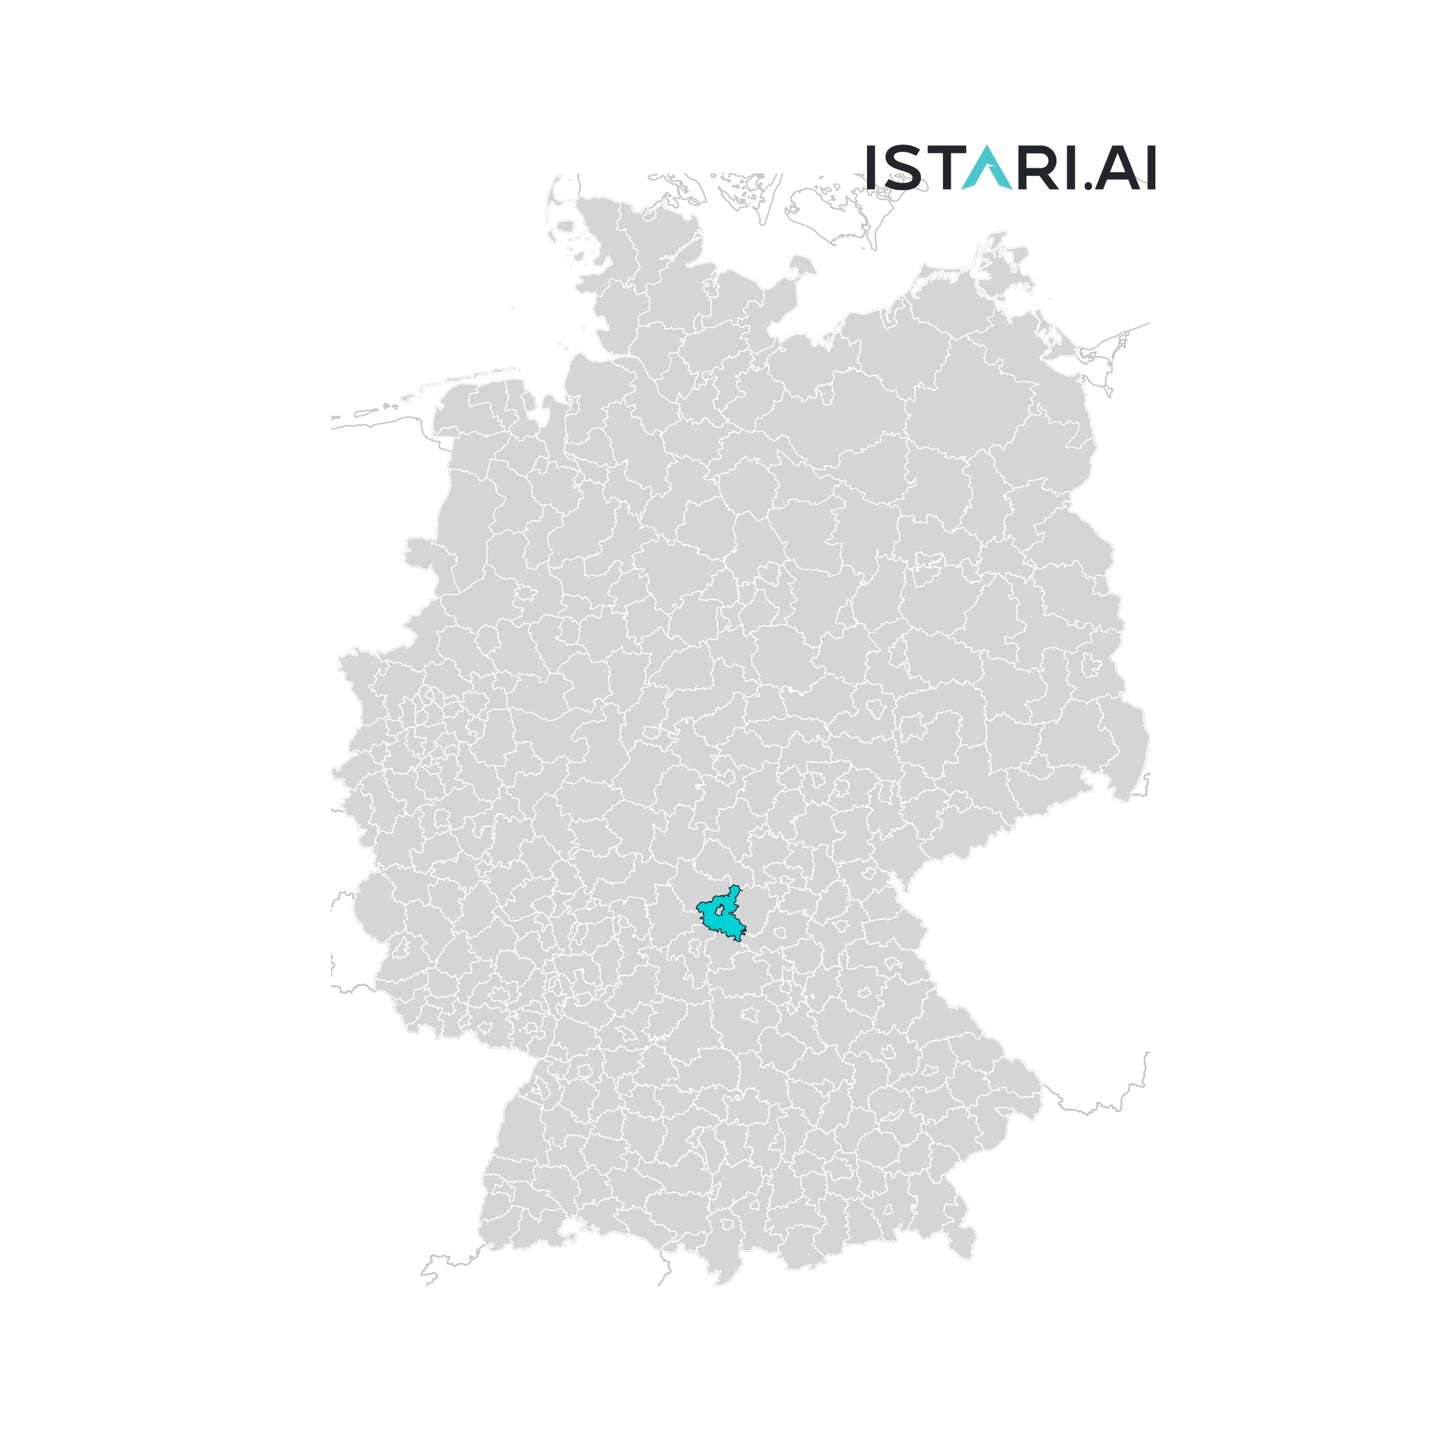 Mobility Company List Schweinfurt, Landkreis Germany